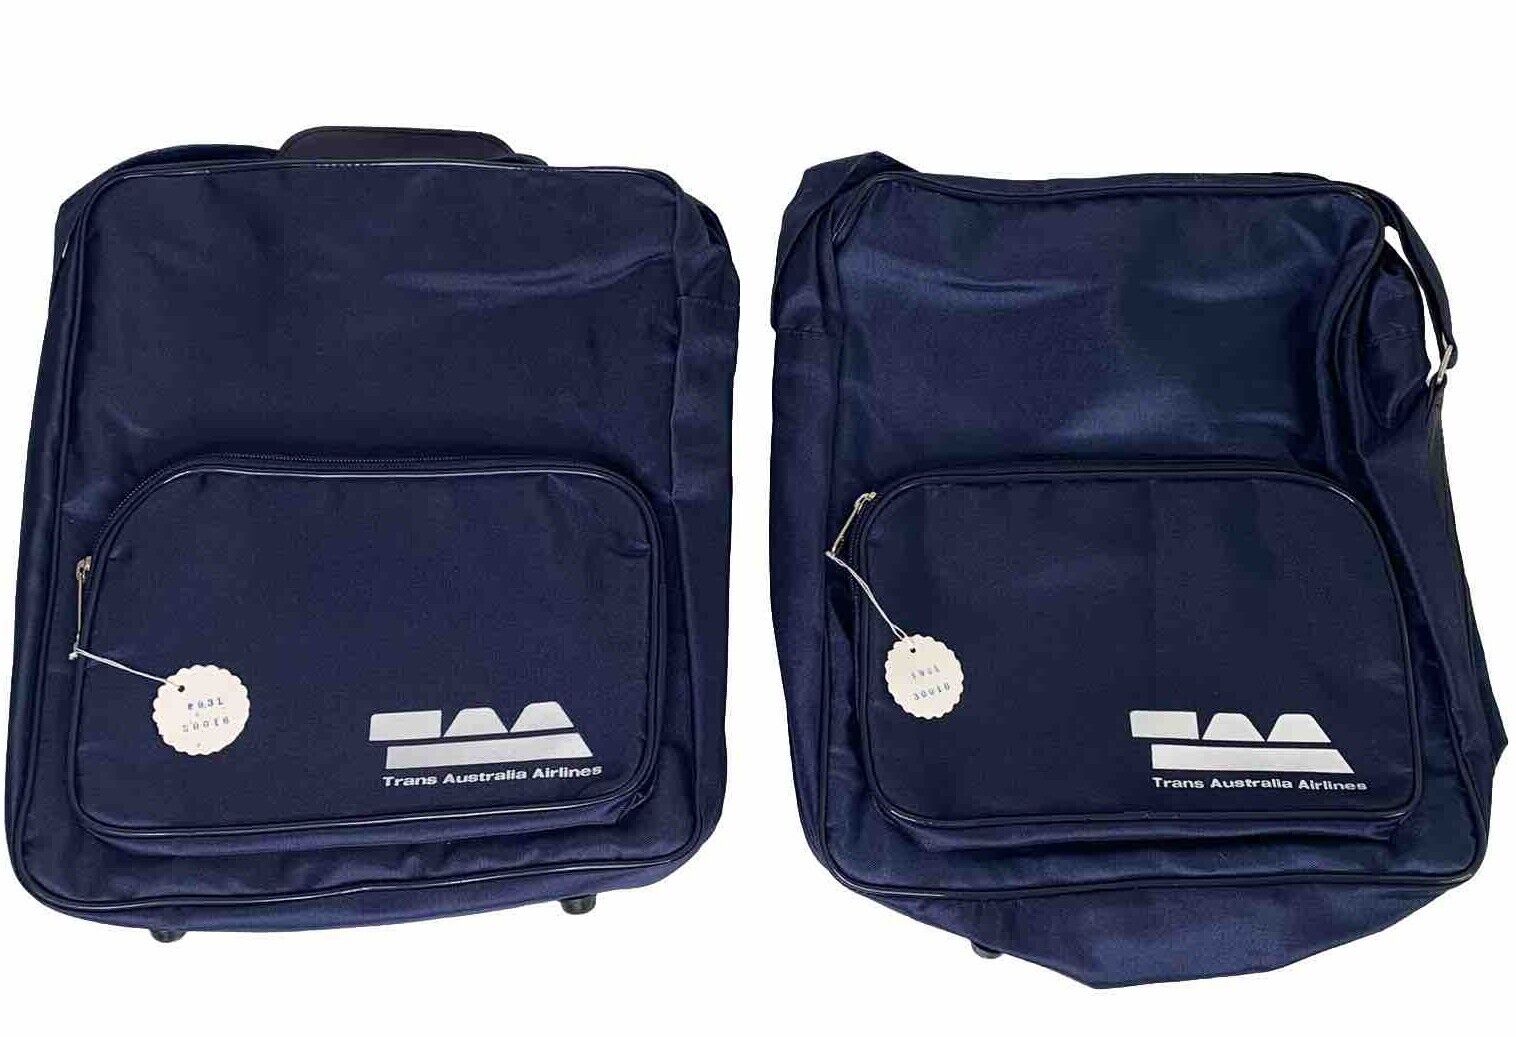 Lot of 2 Trans Australia Airlines Travel Bags Pack Shoulder Strap Blue Nylon